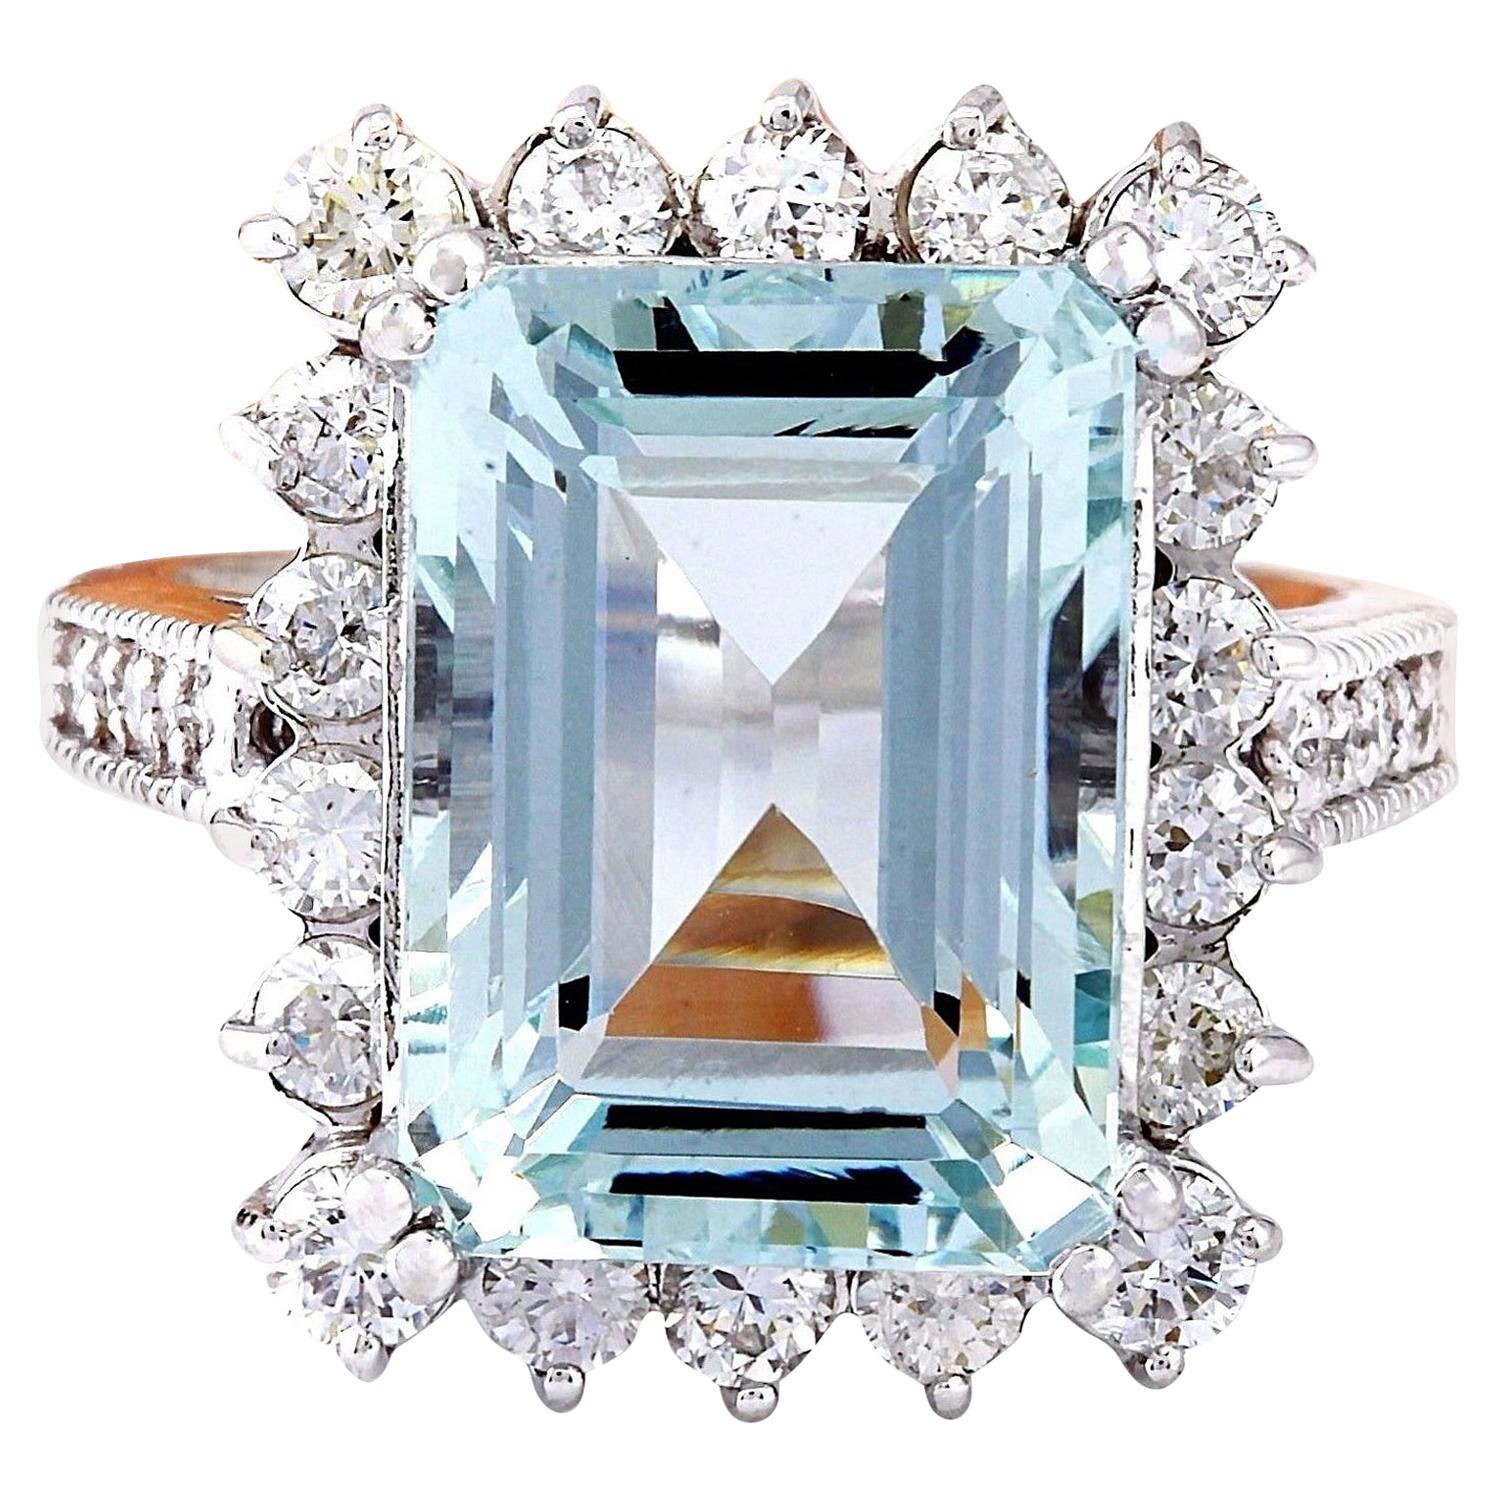 Exquisite Natural Aquamarine Diamond Ring In 14 Karat Solid White Gold  For Sale